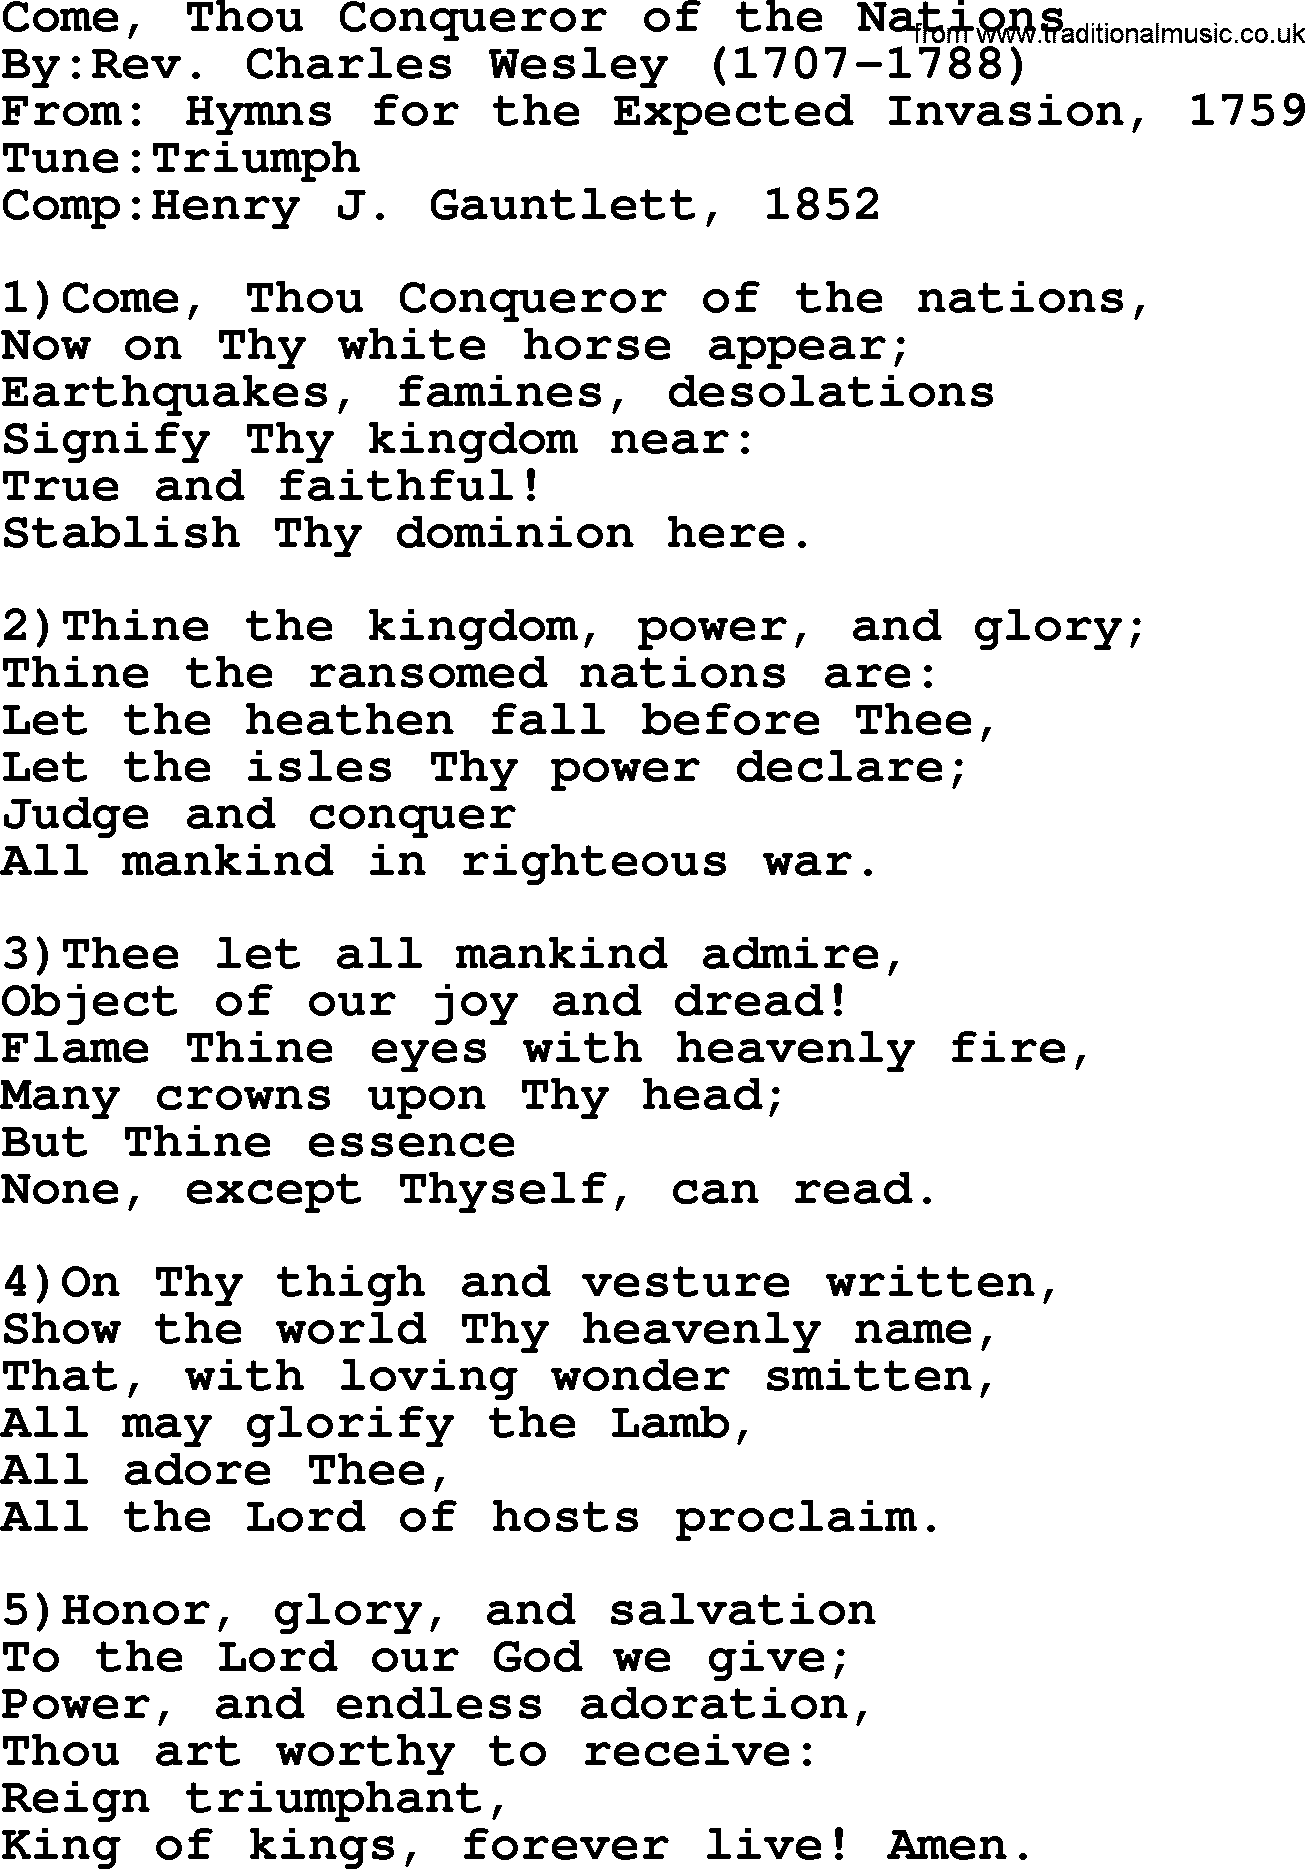 Methodist Hymn: Come, Thou Conqueror Of The Nations, lyrics